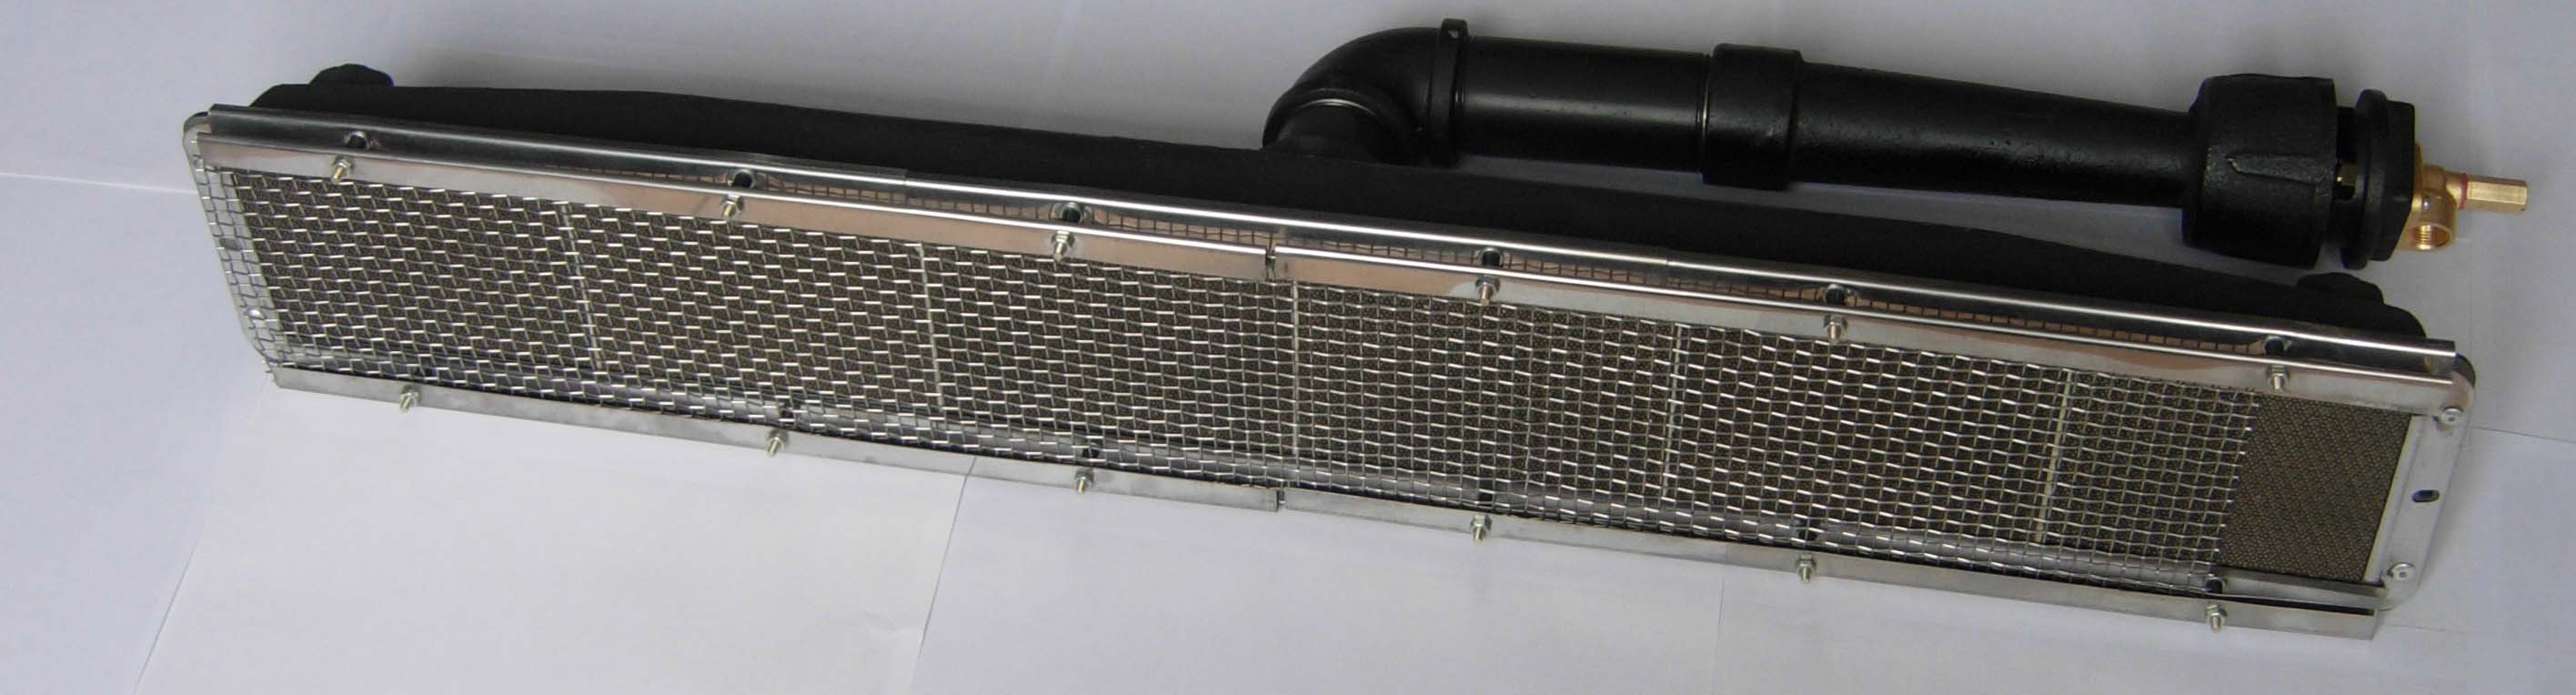 Dry heat sterilization oven HD242